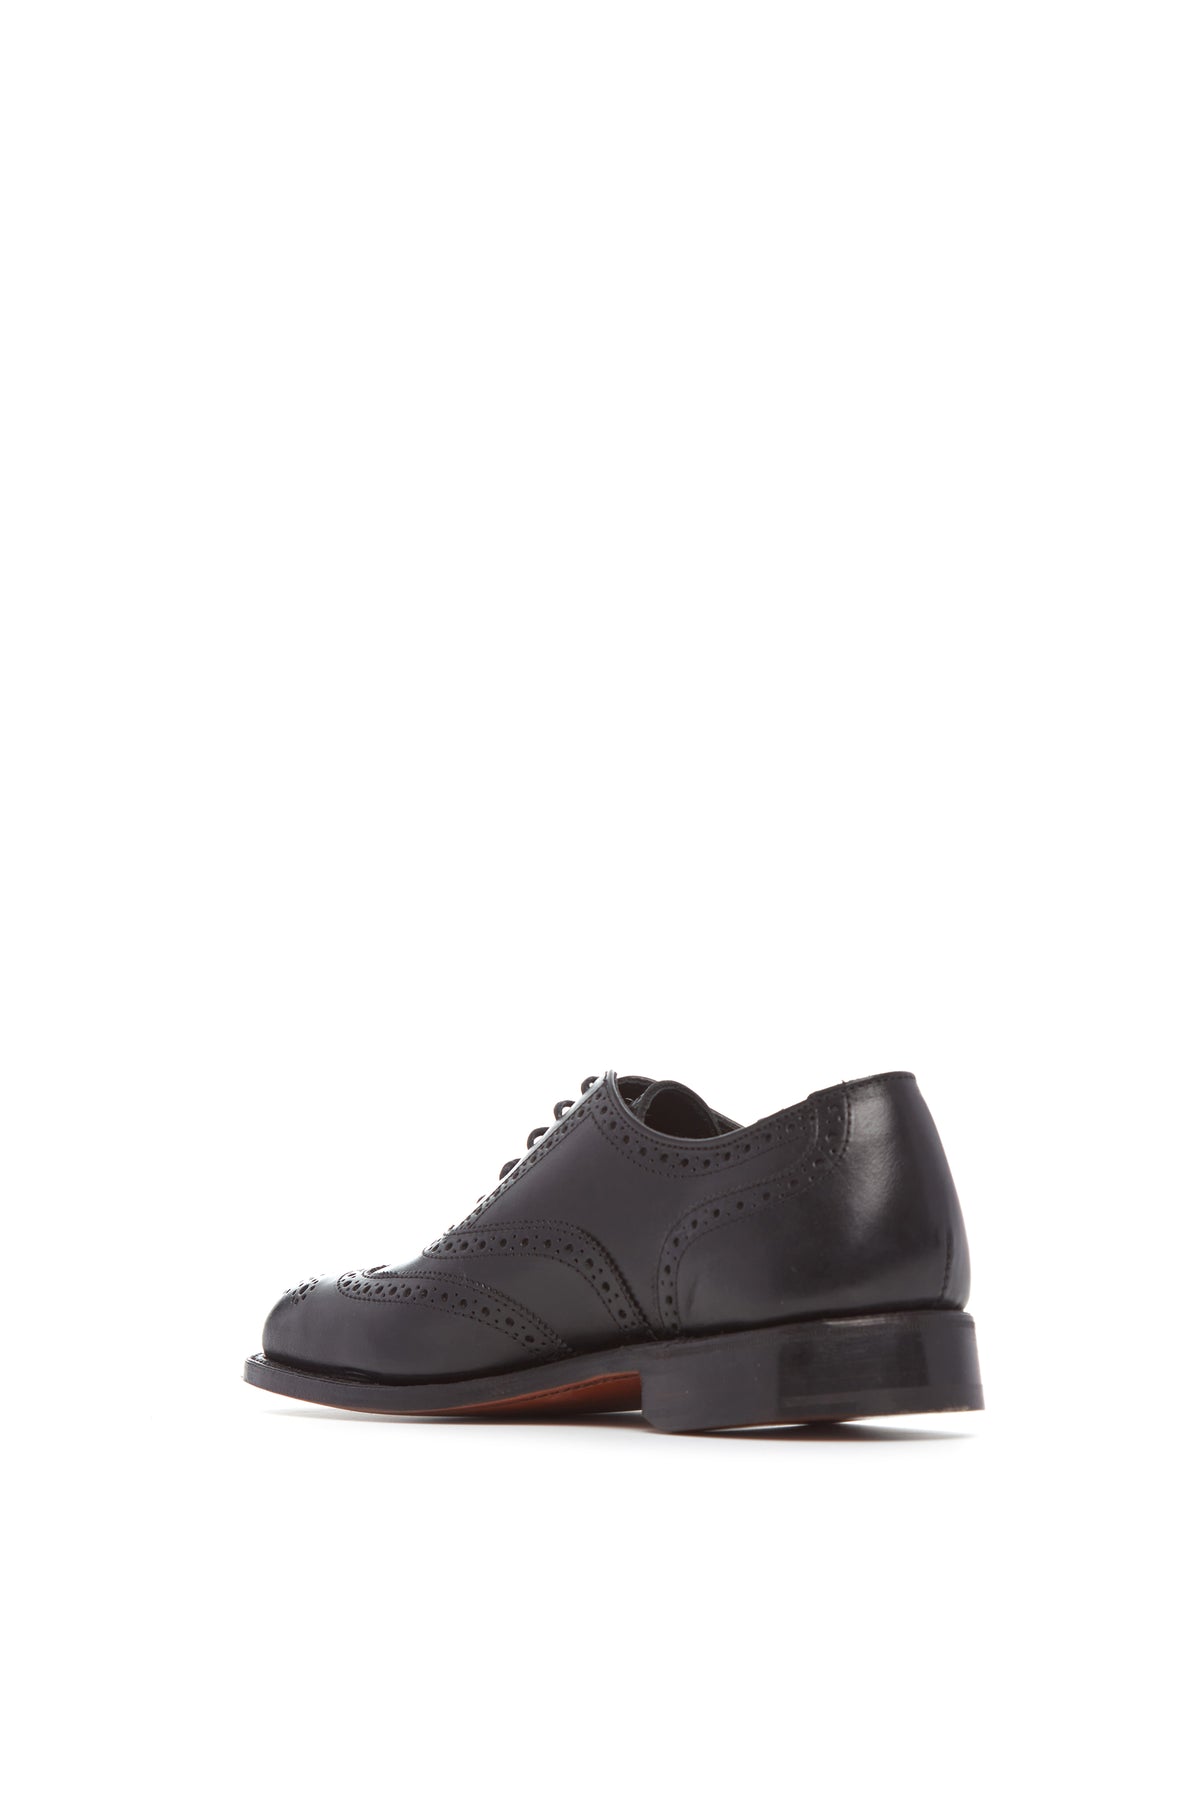 Wincap Oxford Shoe